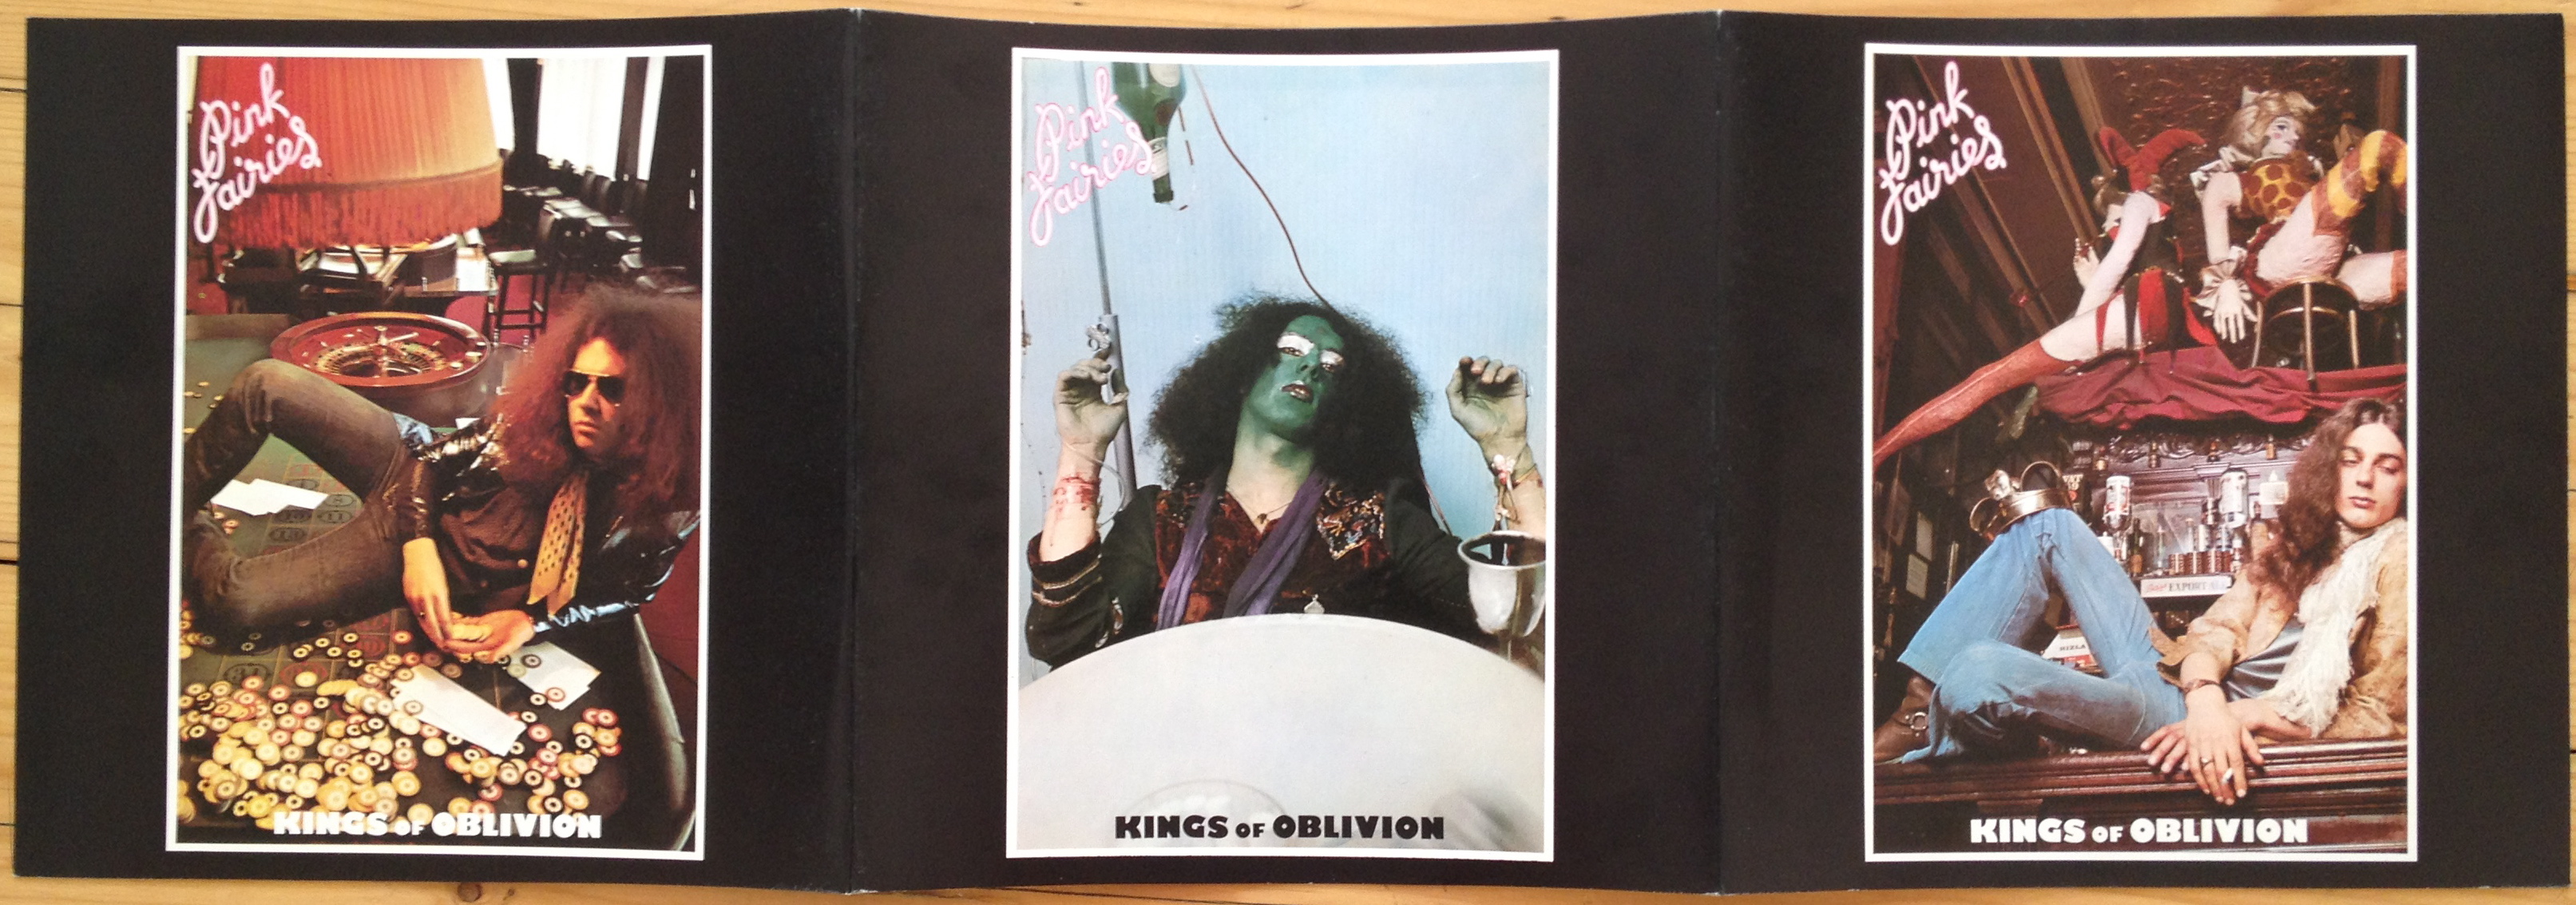 Nostalgipalatset - PINK FAIRIES - Kings of oblivion UK-orig LP + POSTER ...